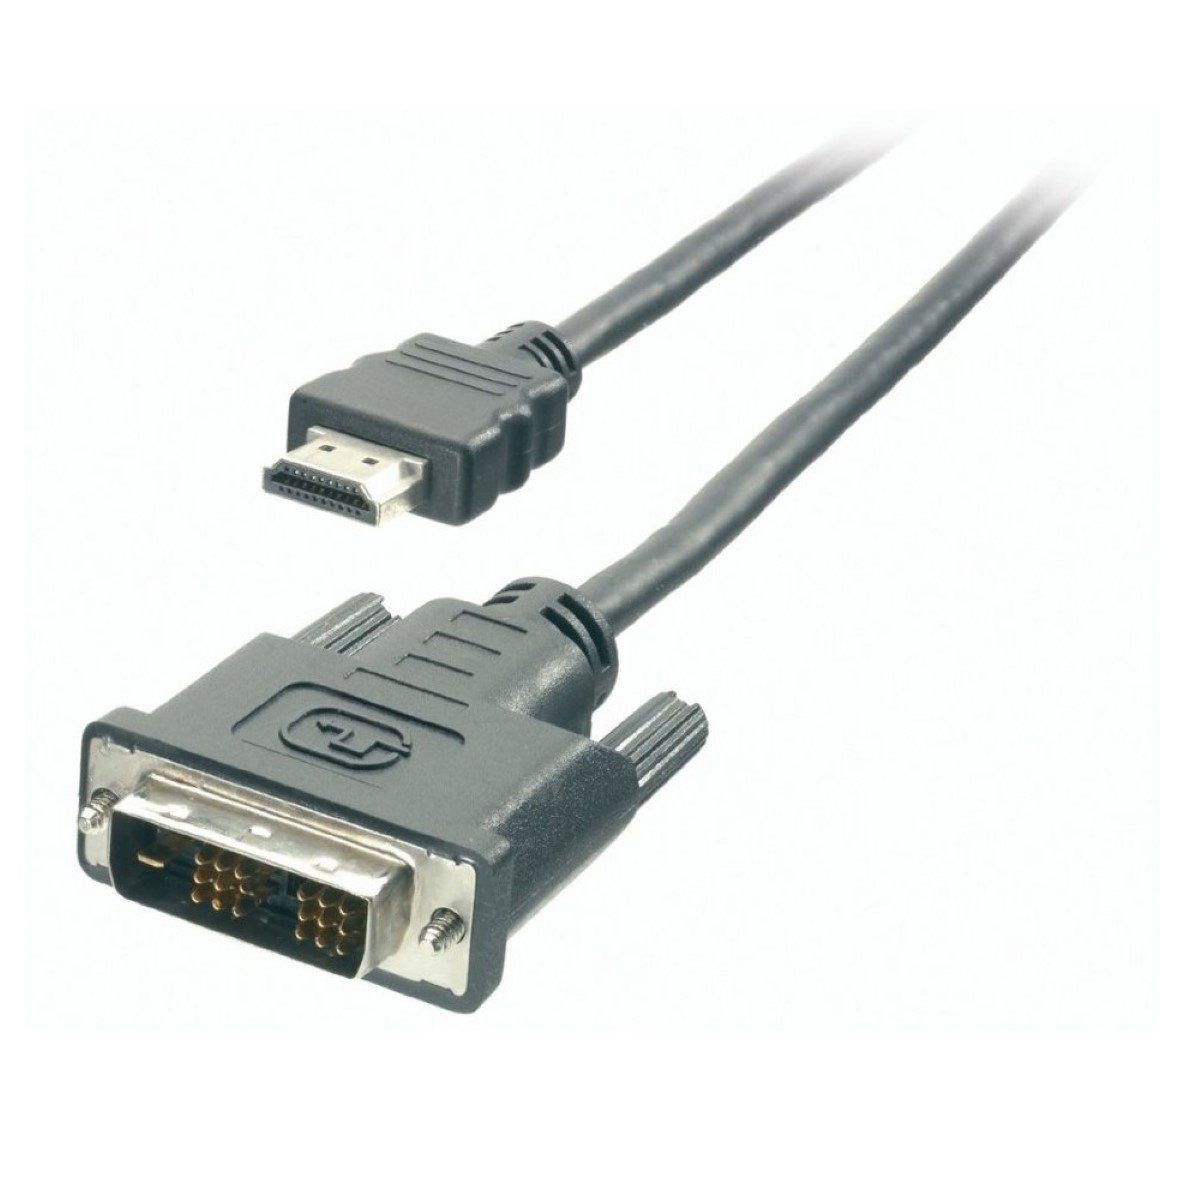 Vivaco HQ 5m HDMI-Stecker auf DVI-D Single Link Video-Adapter DVI-D, 500 cm, TV Adapter-Kabel, Verbindungskabel, HD-TV PC, Geschwindigkeit 5 Gbit/s